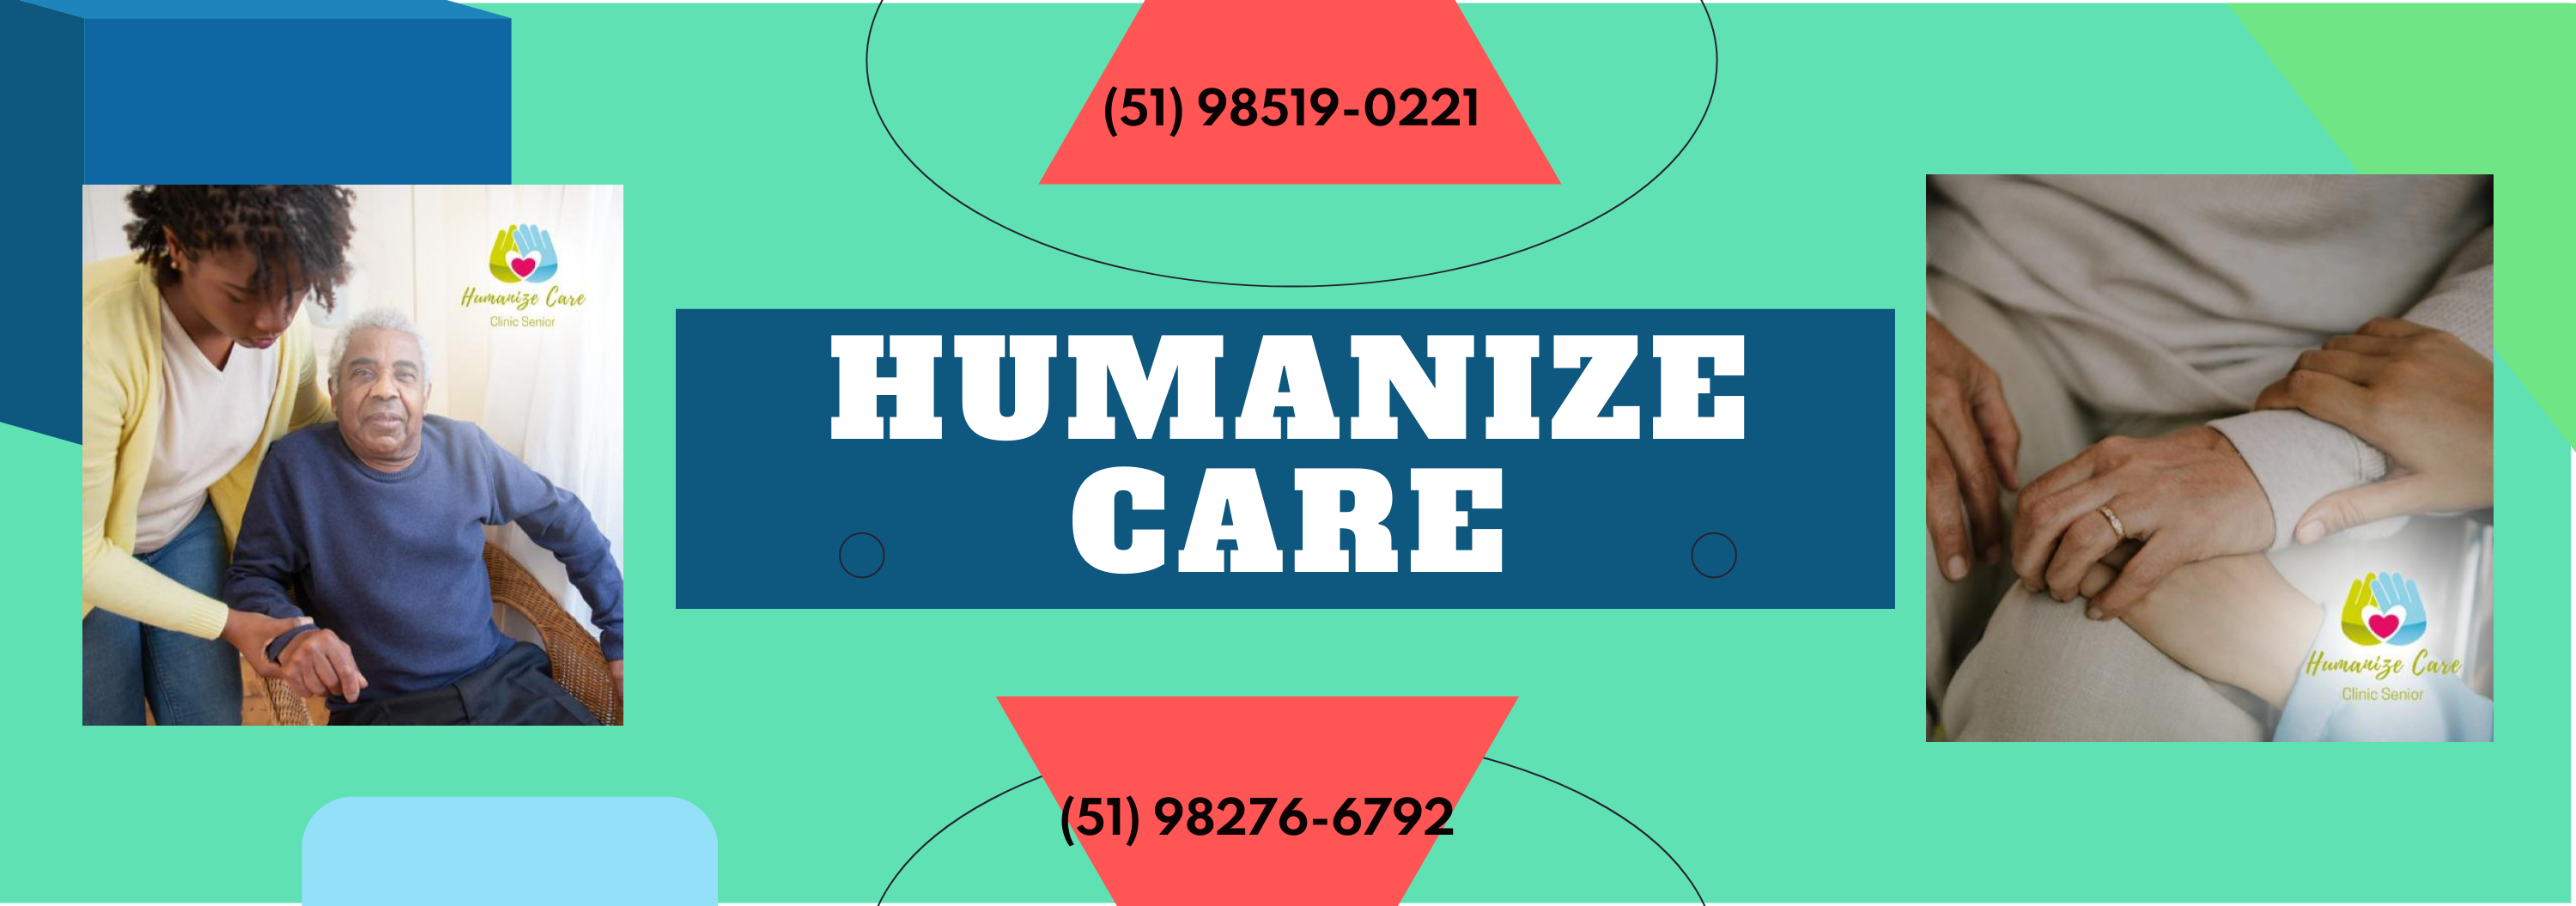 humanizecare-banner2